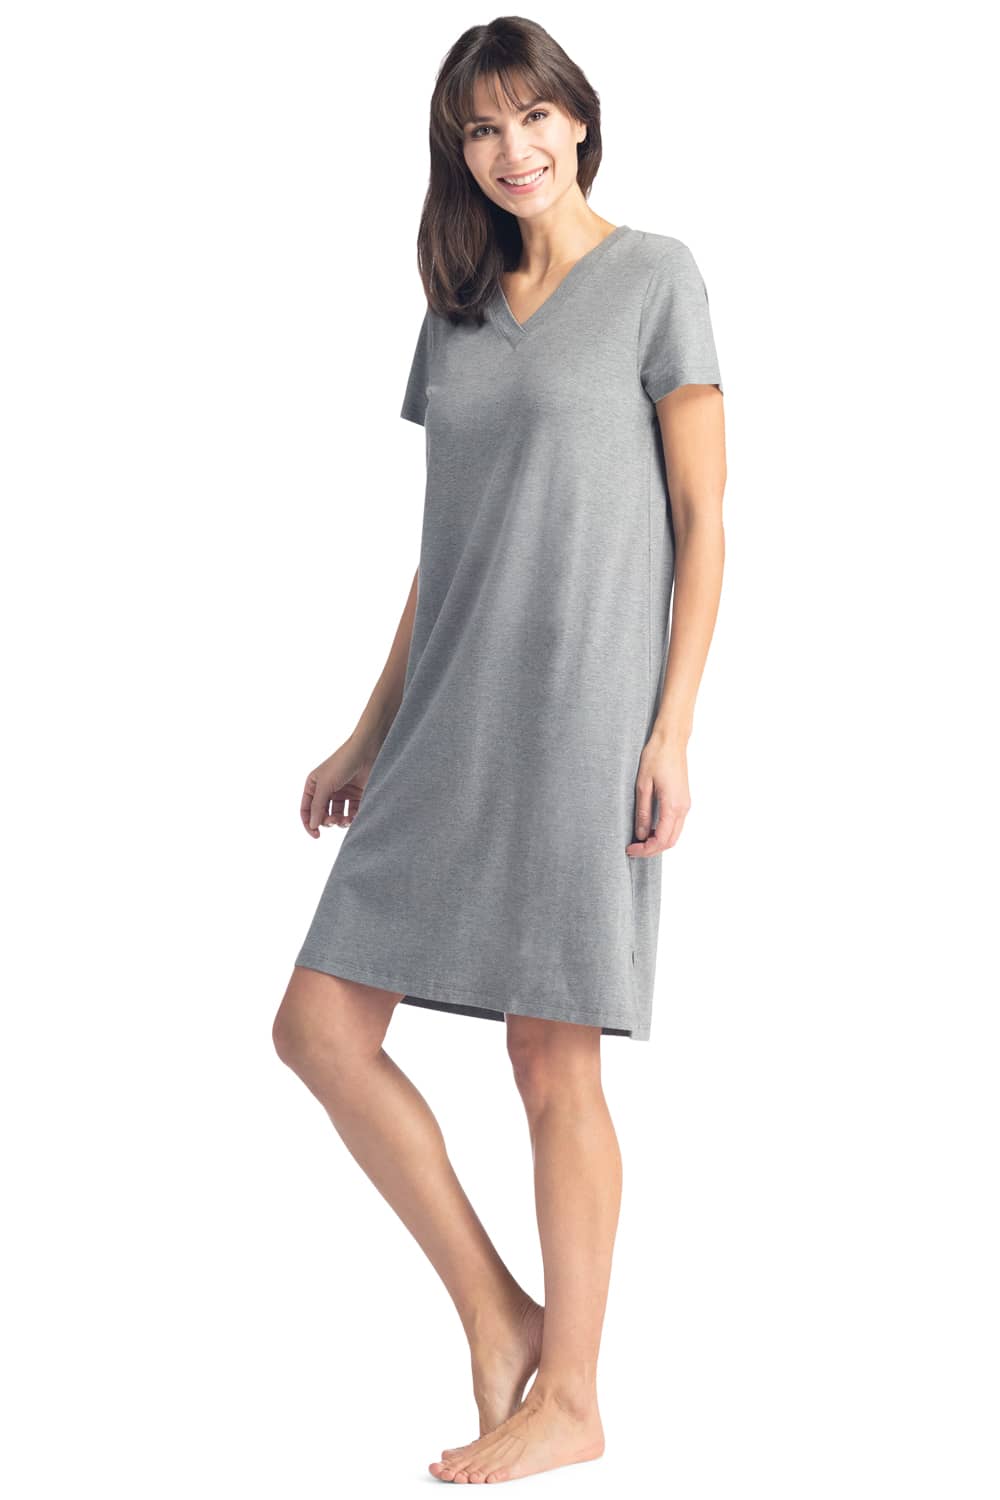 Buy Women's Nightgowns with Built in Bra Nightshirt Short Sleeve Sleepwear  Modal Soft Sleep Shirt Night Dress, Dark Gray, Medium at